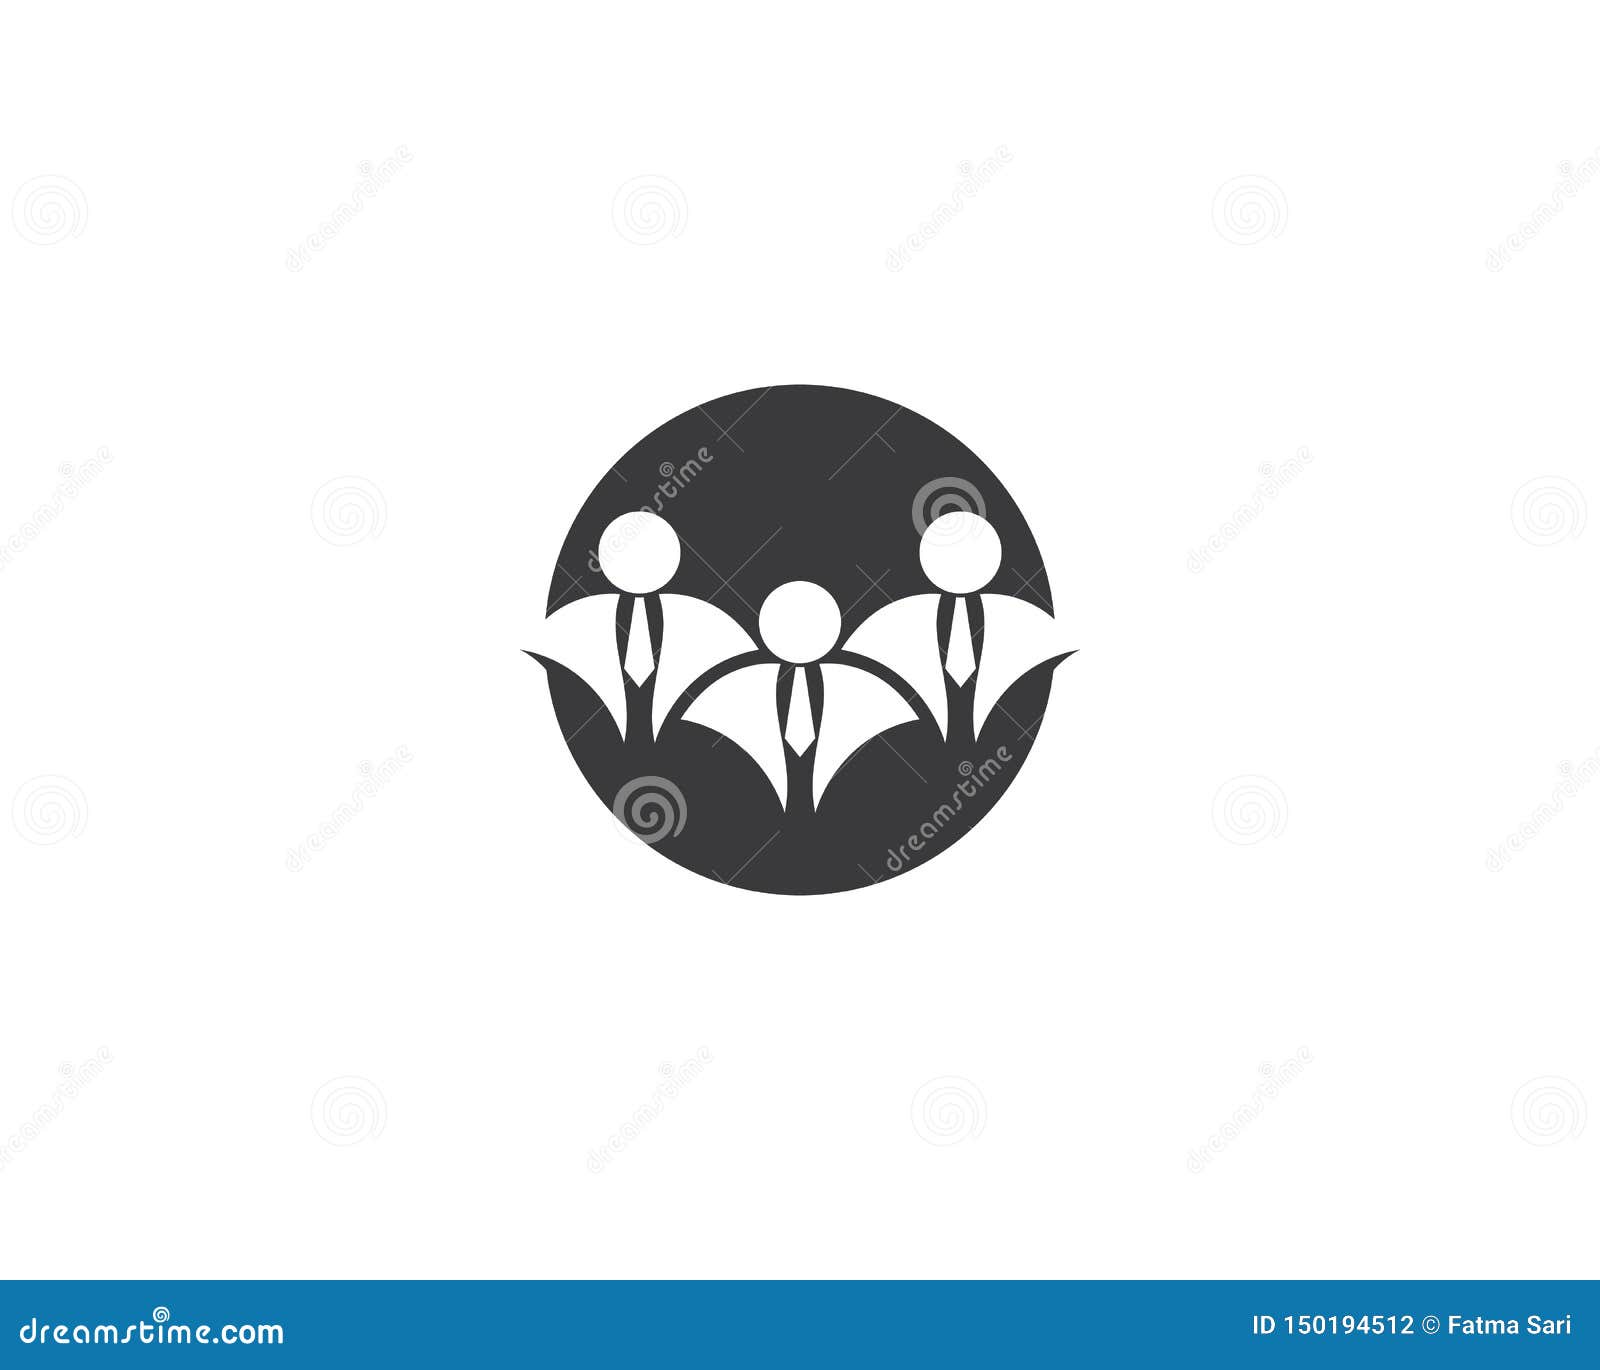 Businessman Logo Illustration Stock Vector - Illustration of profile